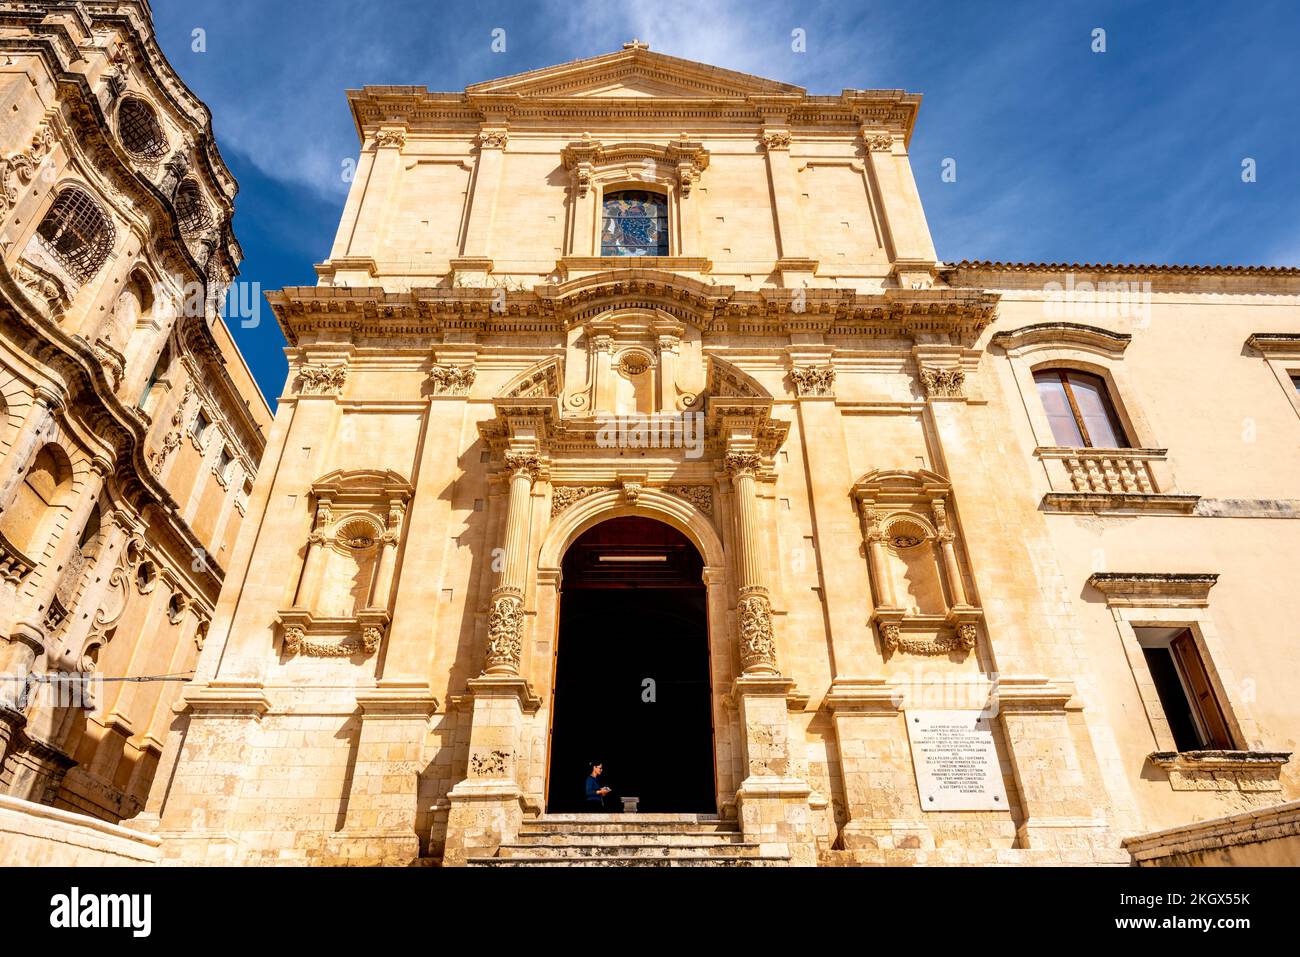 The Church of San Francesco d'Assisi all' Immacolata, Noto, Sicily, Italy. Stock Photo